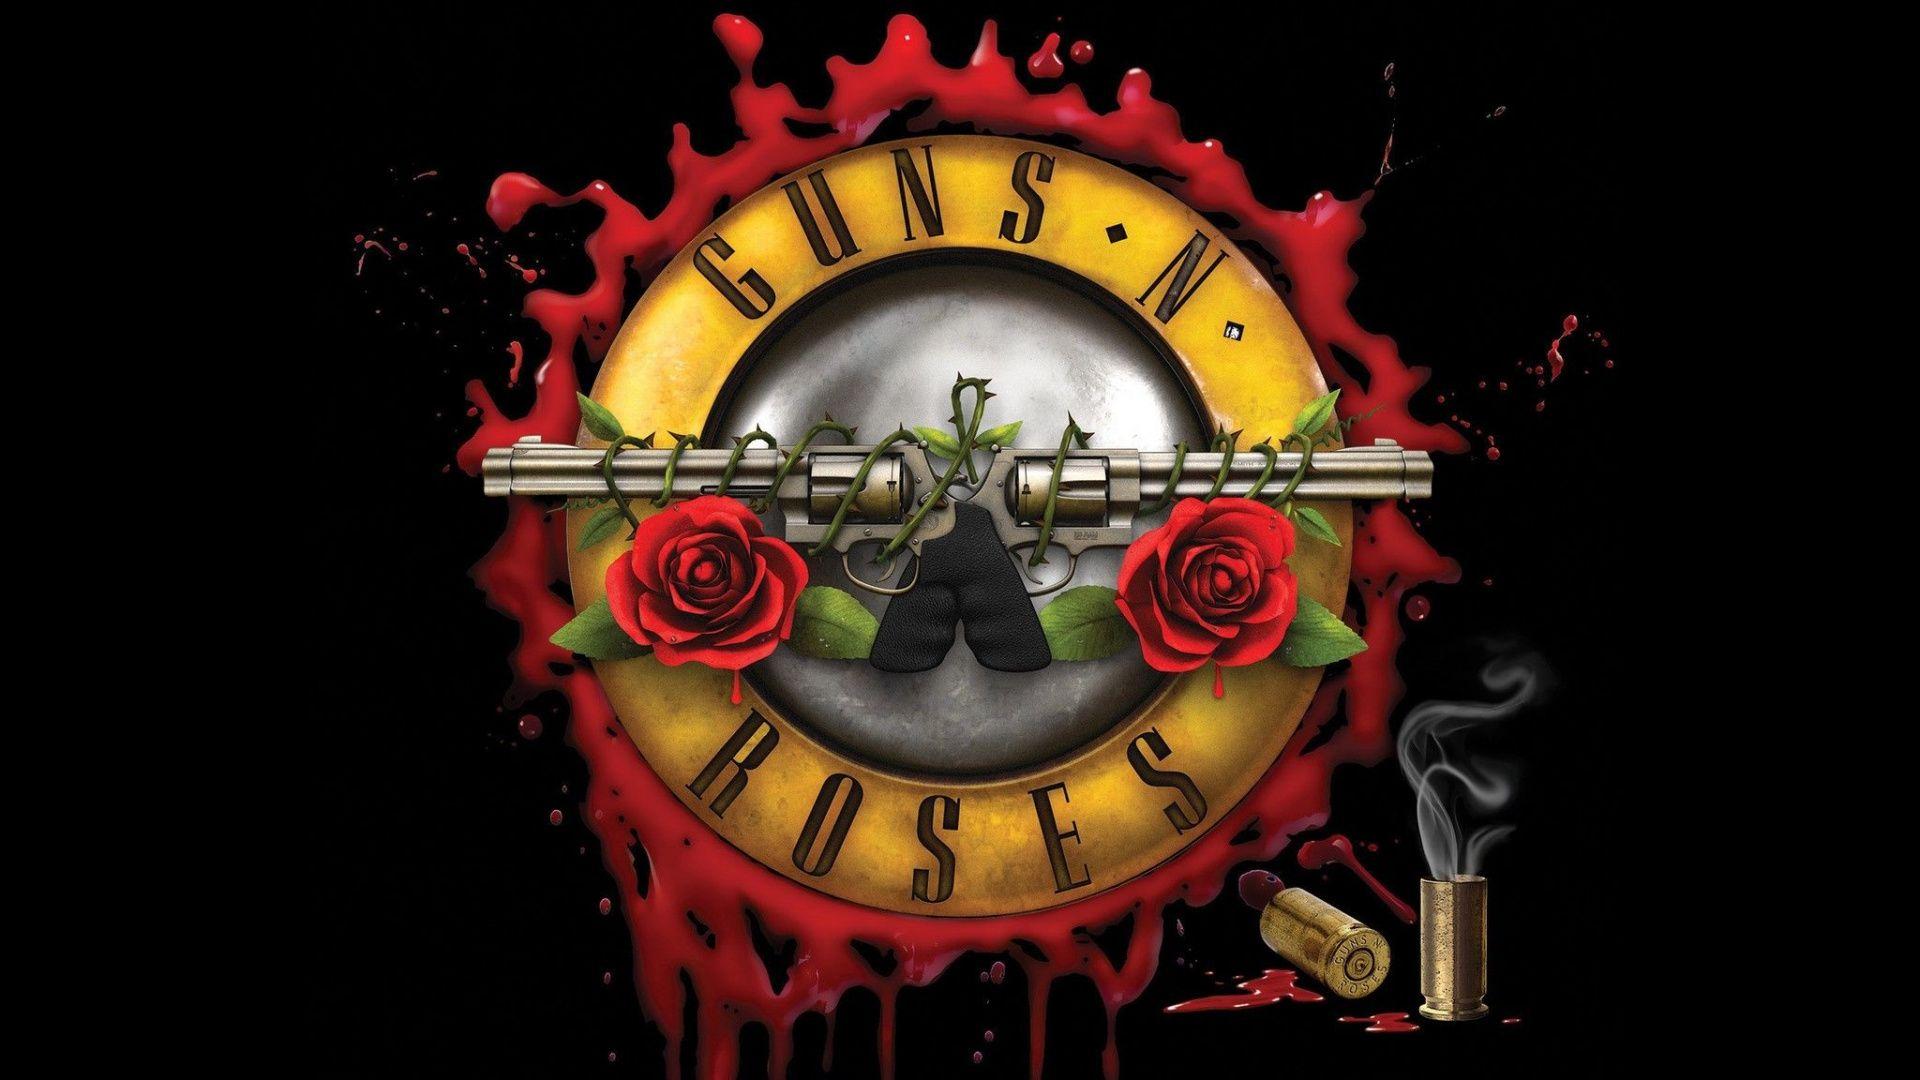 Guns N Roses phone wallpaper» 1080P, 2k, 4k Full HD Wallpapers, Backgrounds  Free Download | Wallpaper Crafter